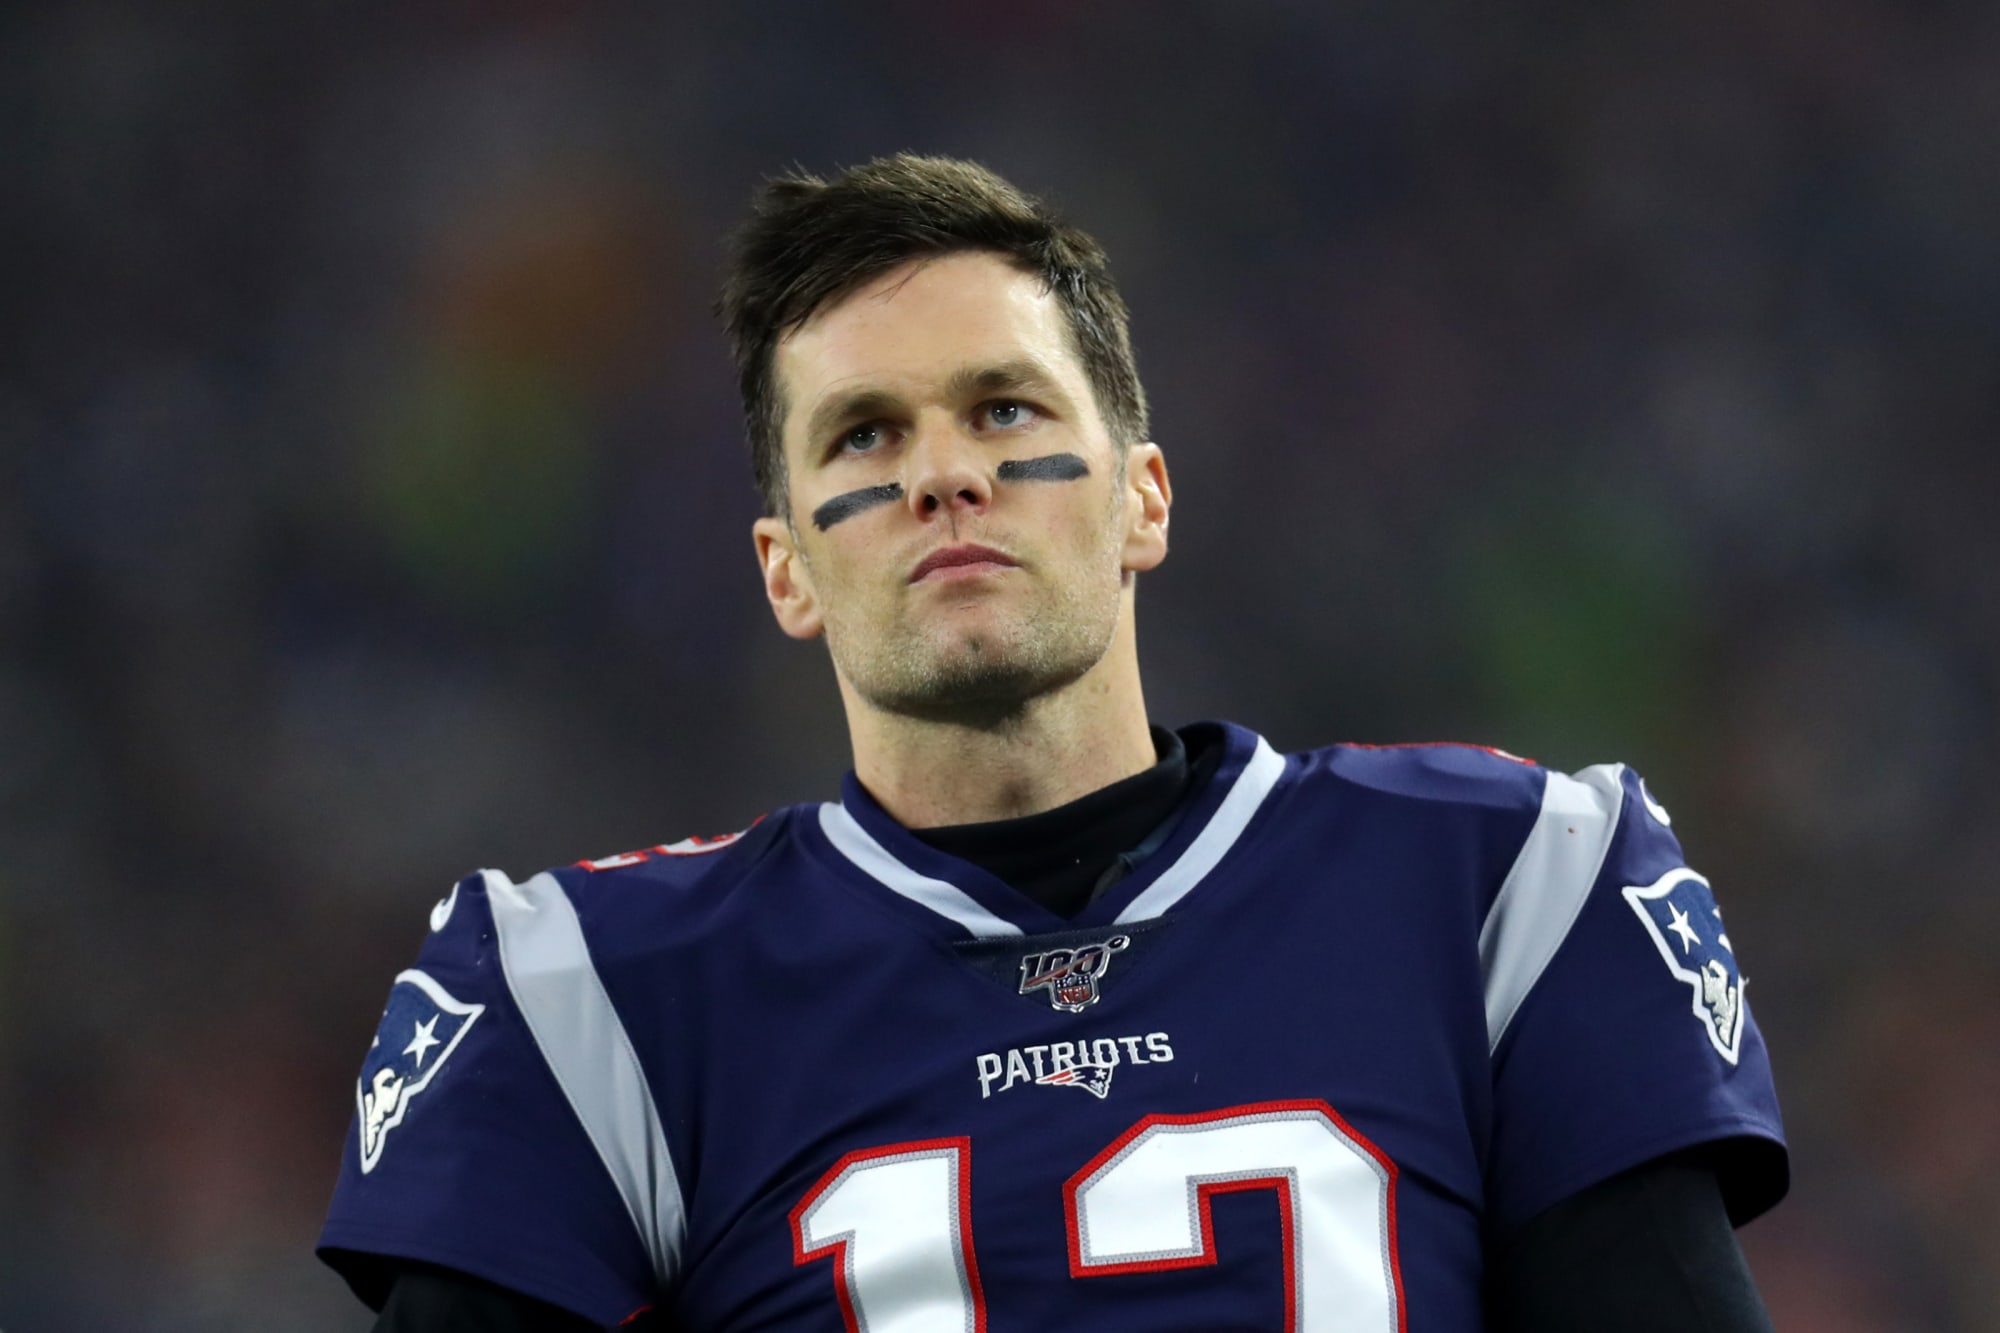 Tom Brady retires, leaving behind an unimaginable legacy